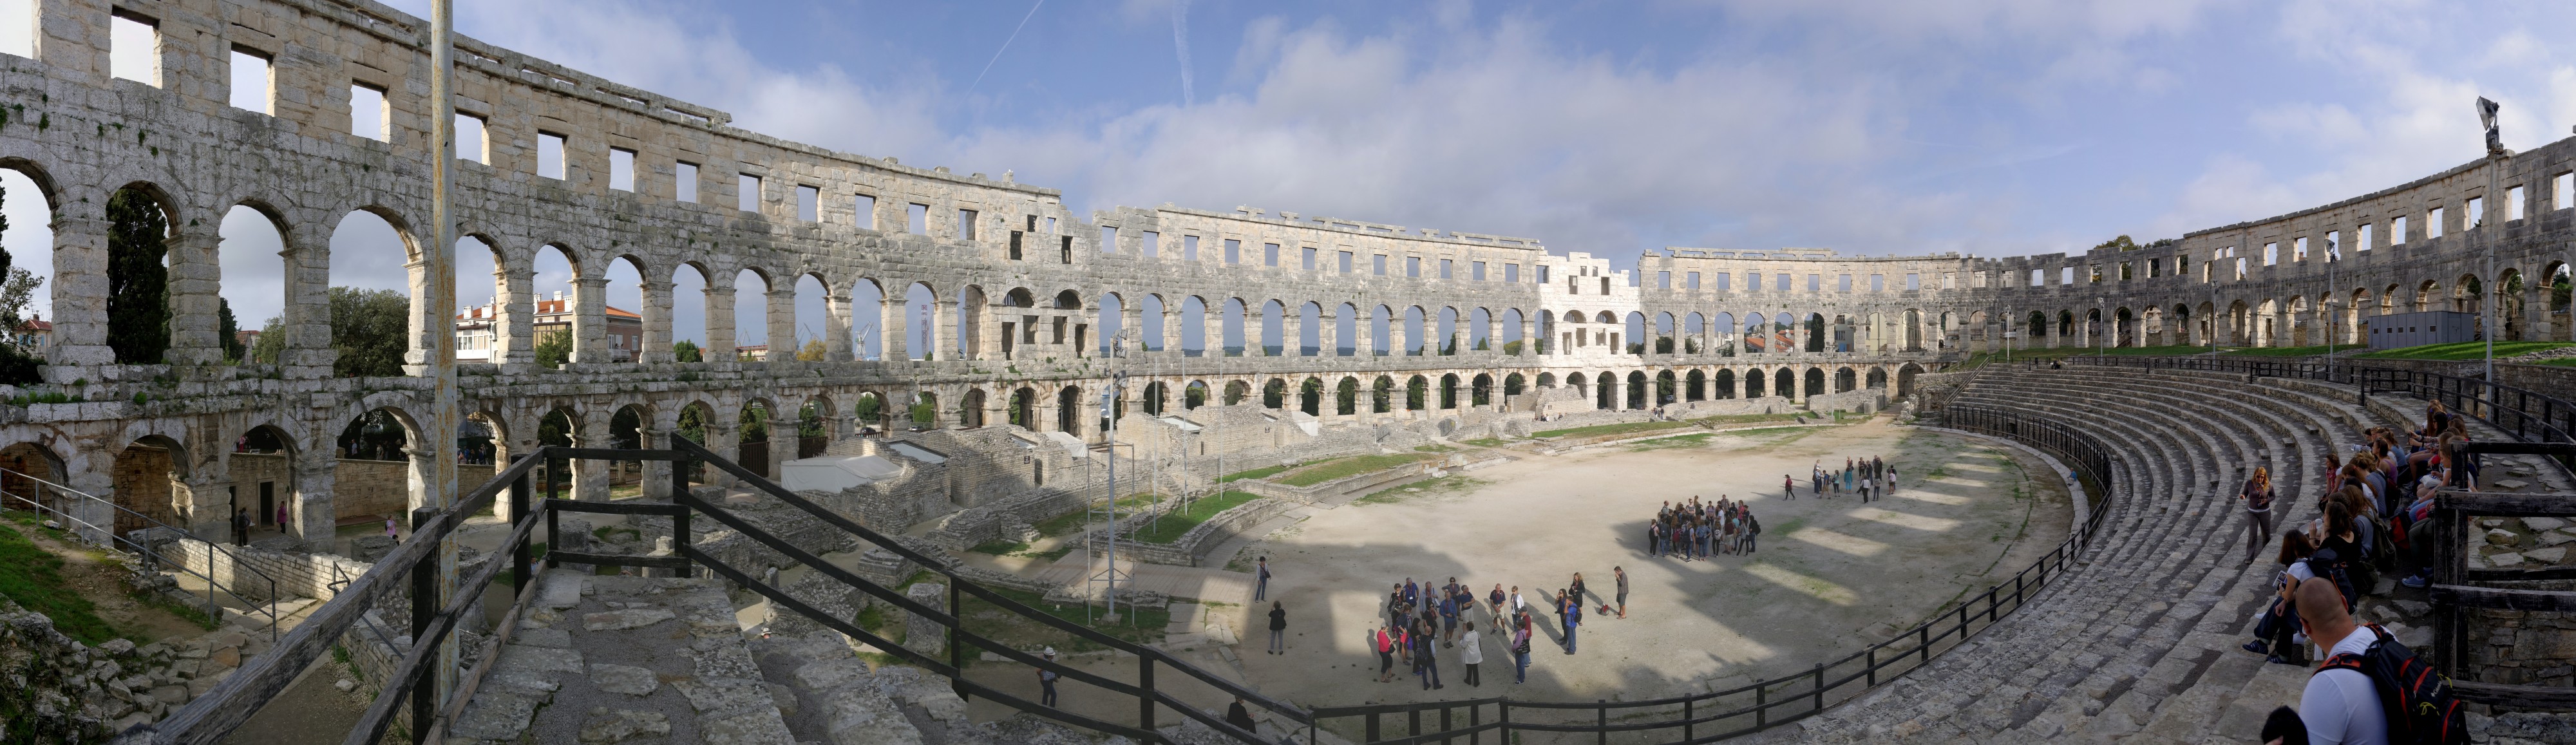 Croatia Pula Amphitheatre interior BW 2014-10-11 10-03-10